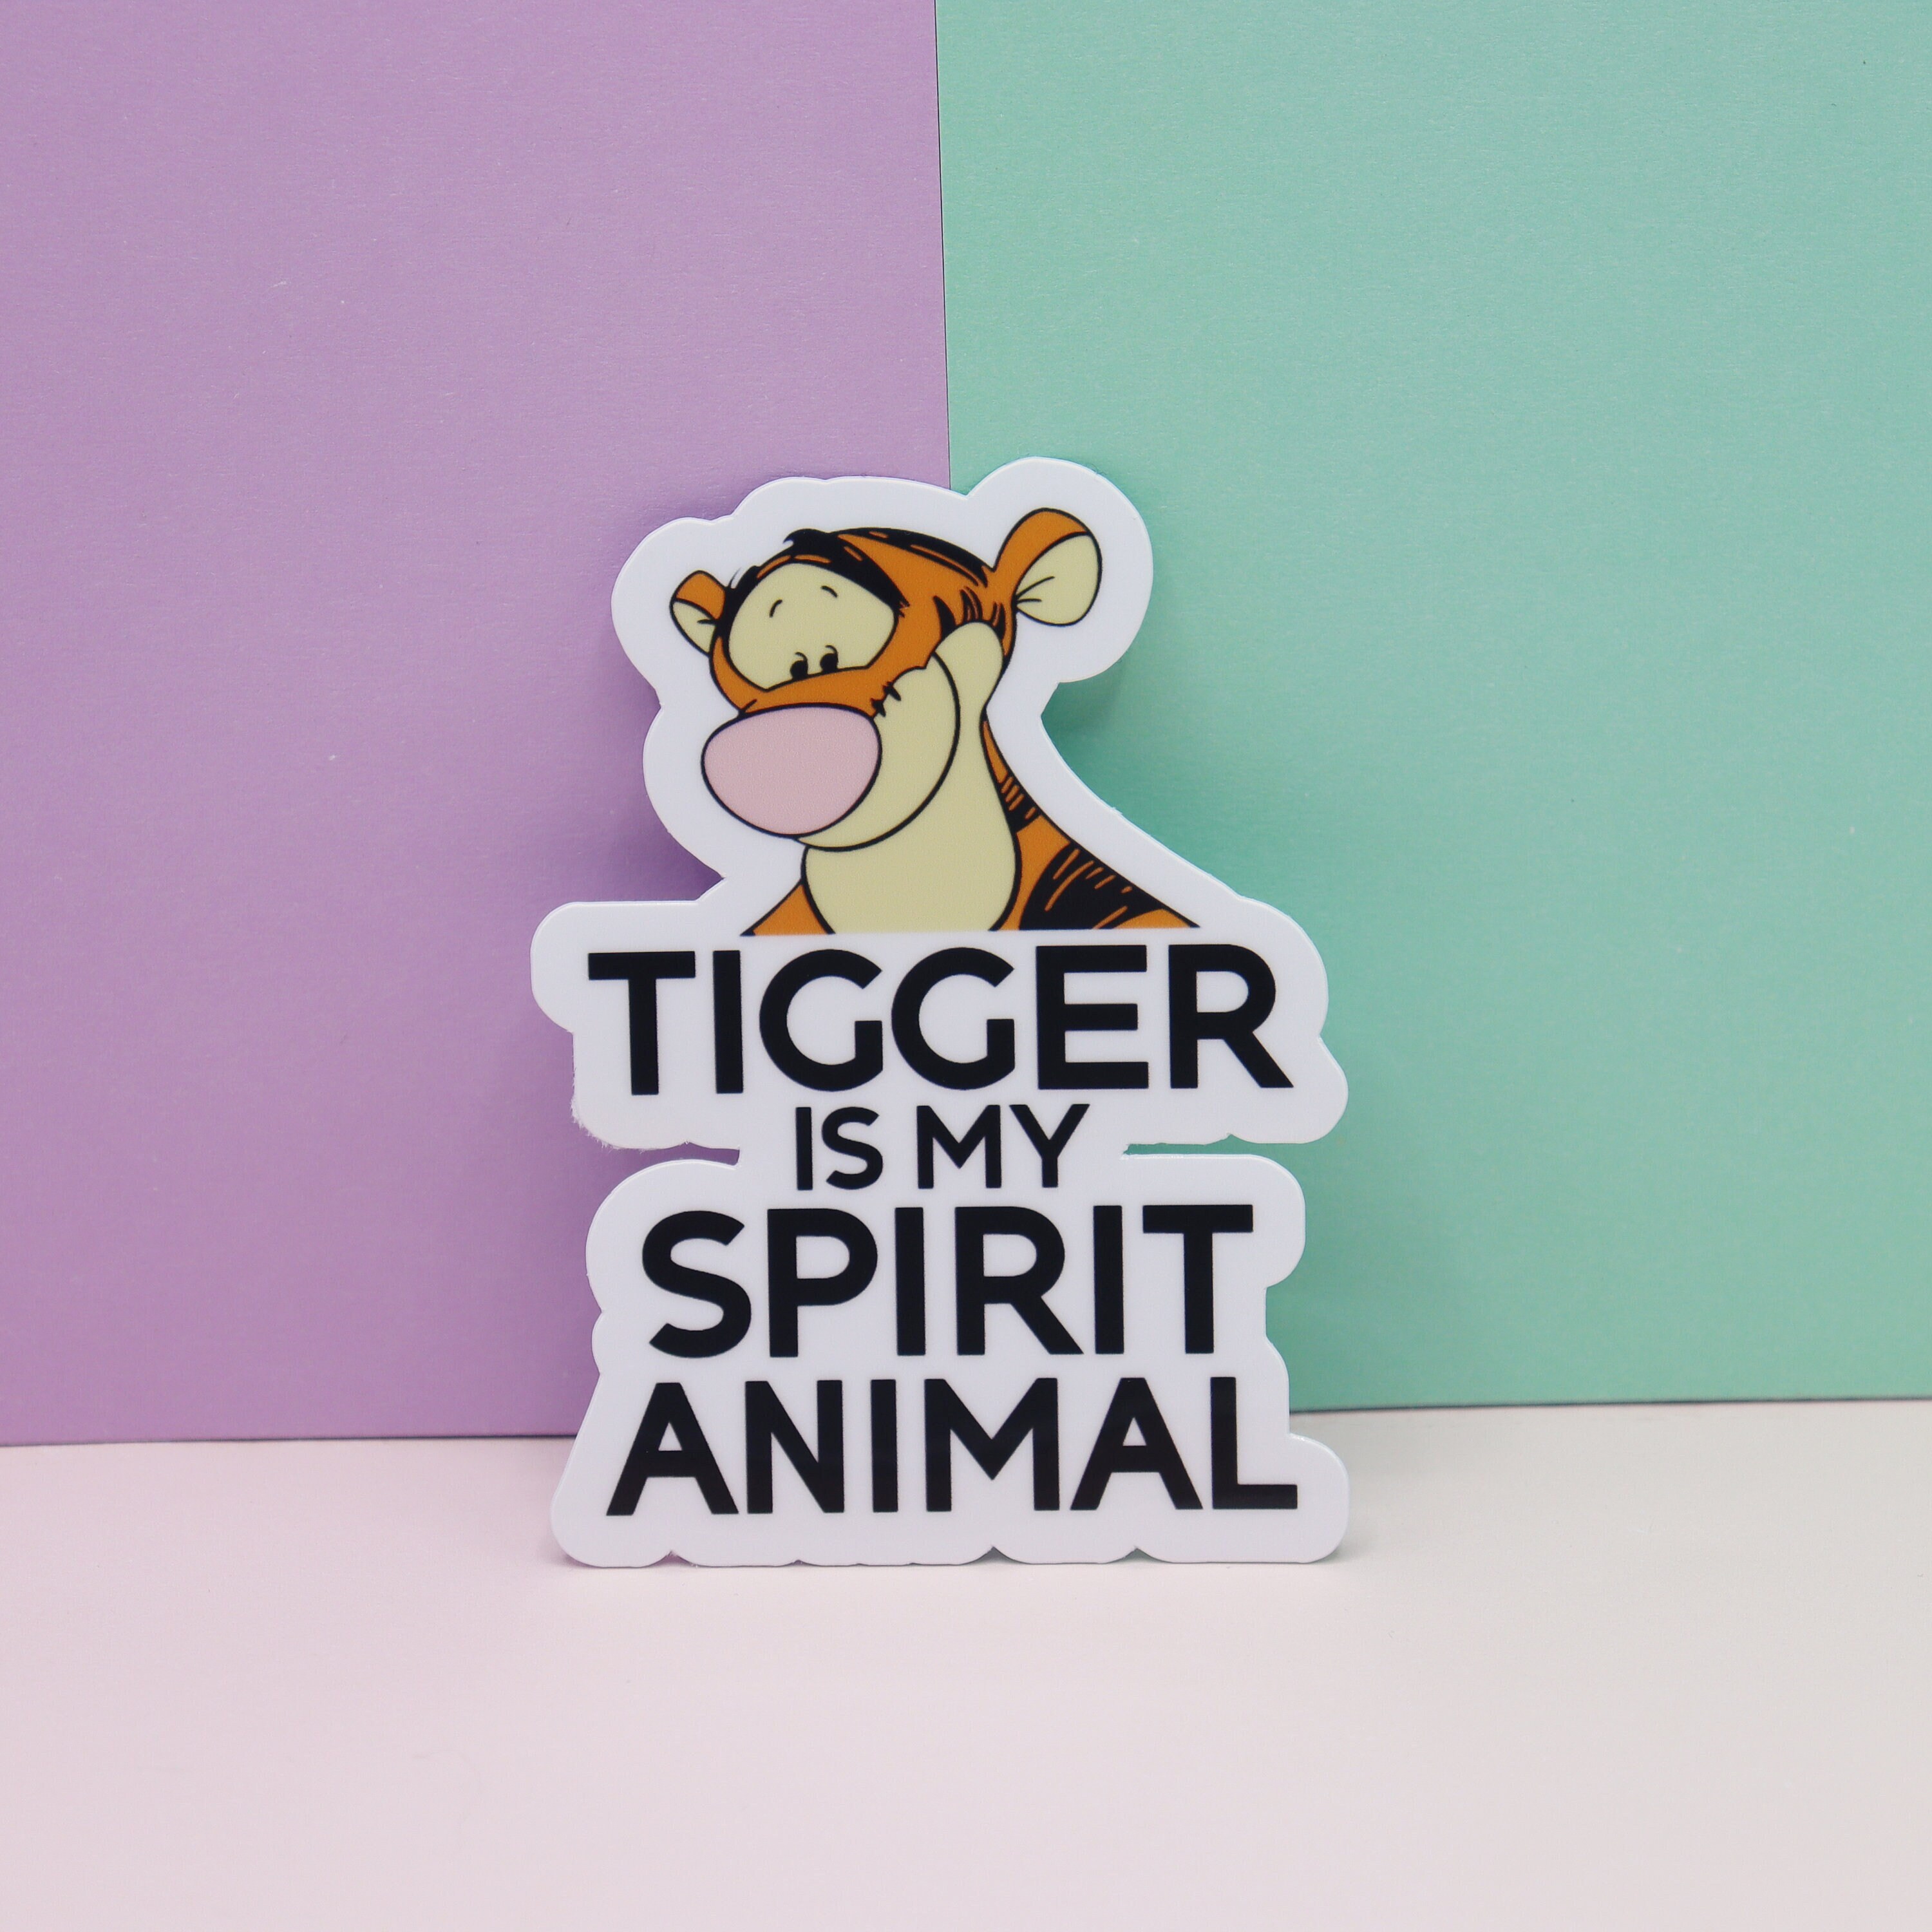 Disney © Winnie the Pooh Tigger - Iron on patches, size: 6,1 x 4,5 cm